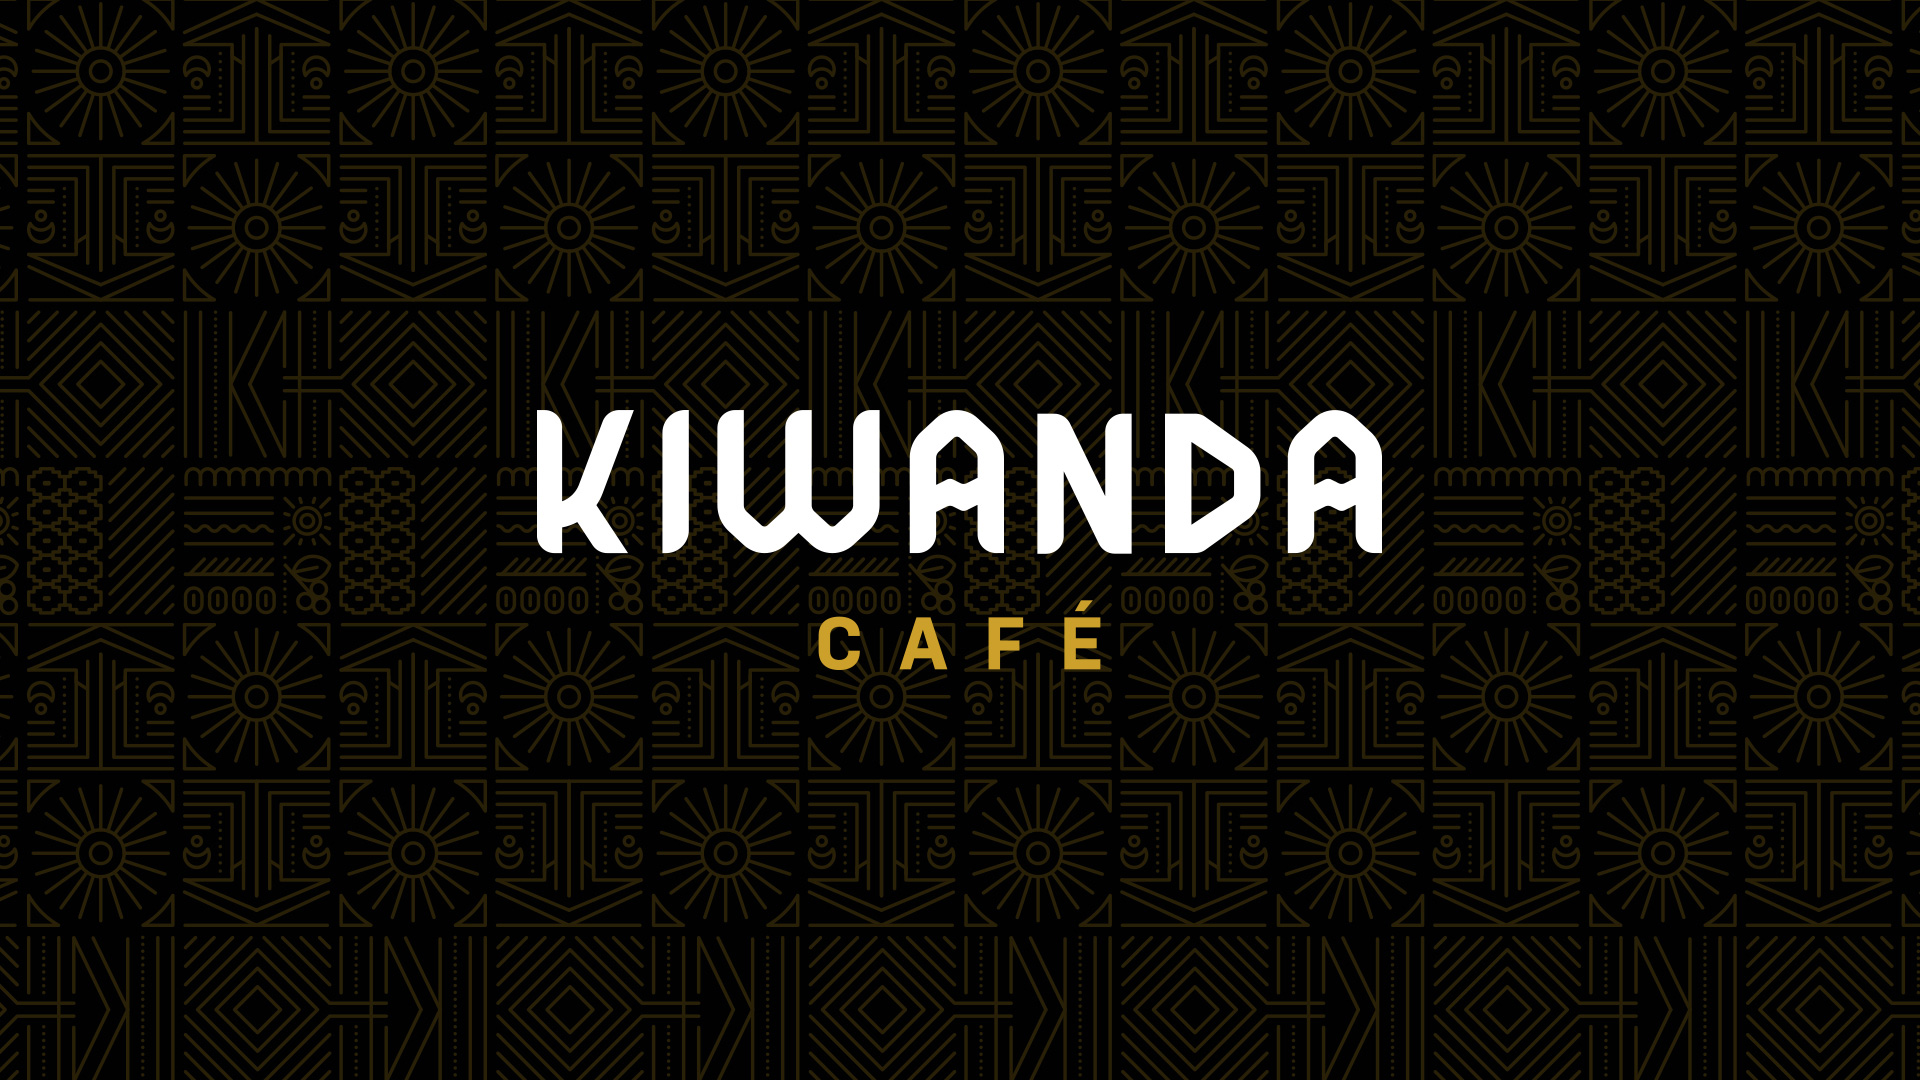 Burleigh Black Giraffe Beer on Tap — Kiwanda Cafe